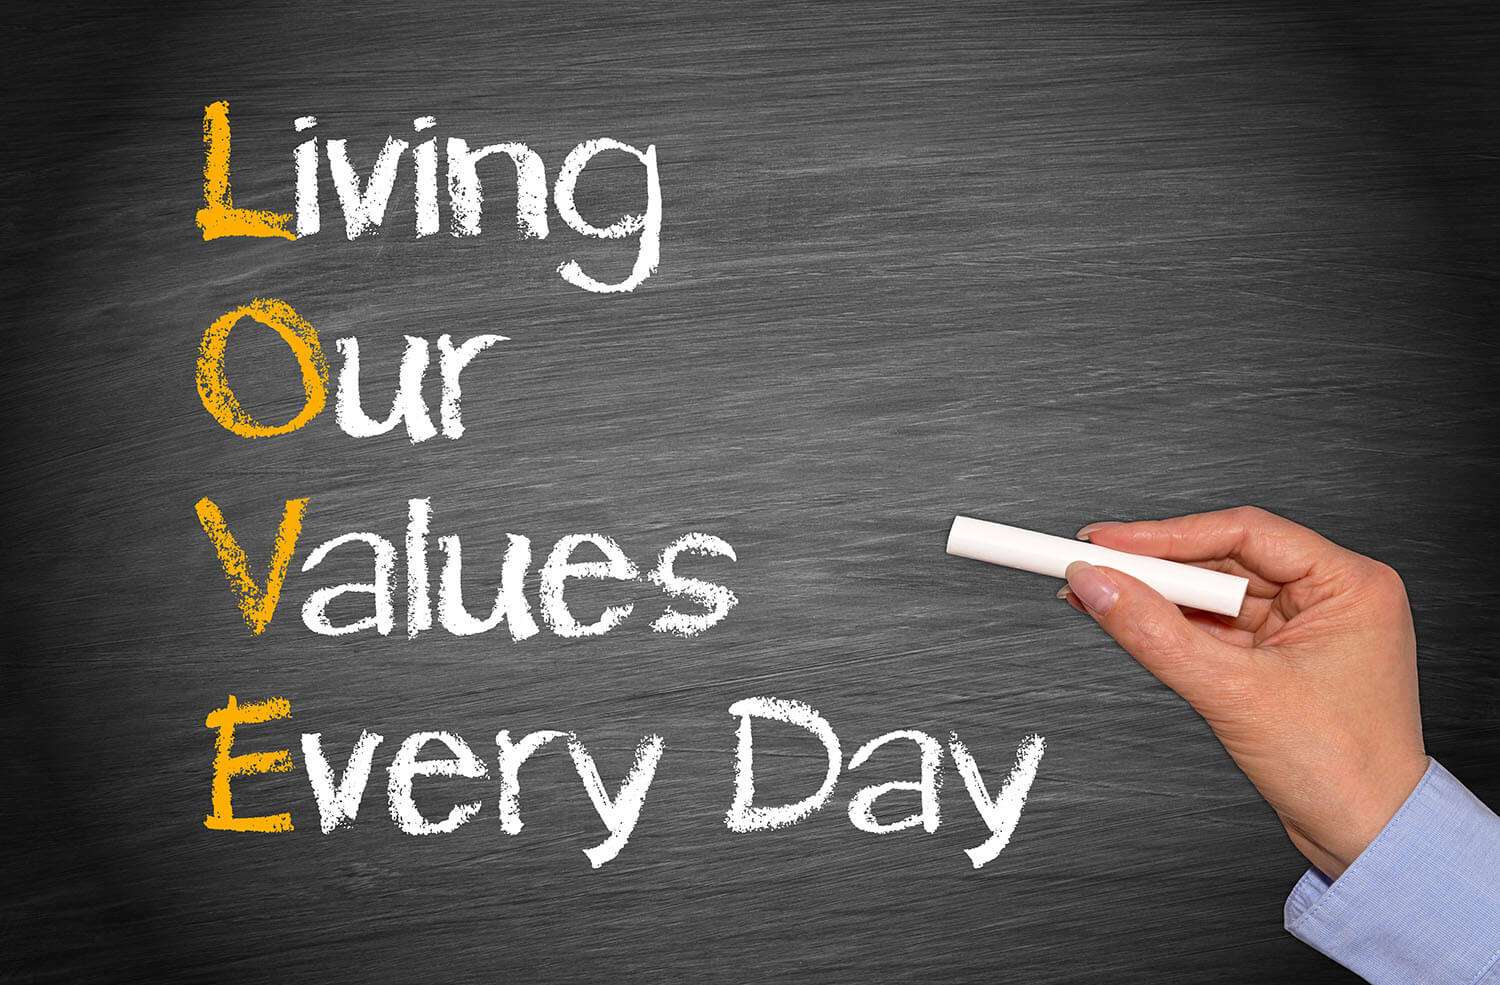 Vivere i nostri valori ogni giorno